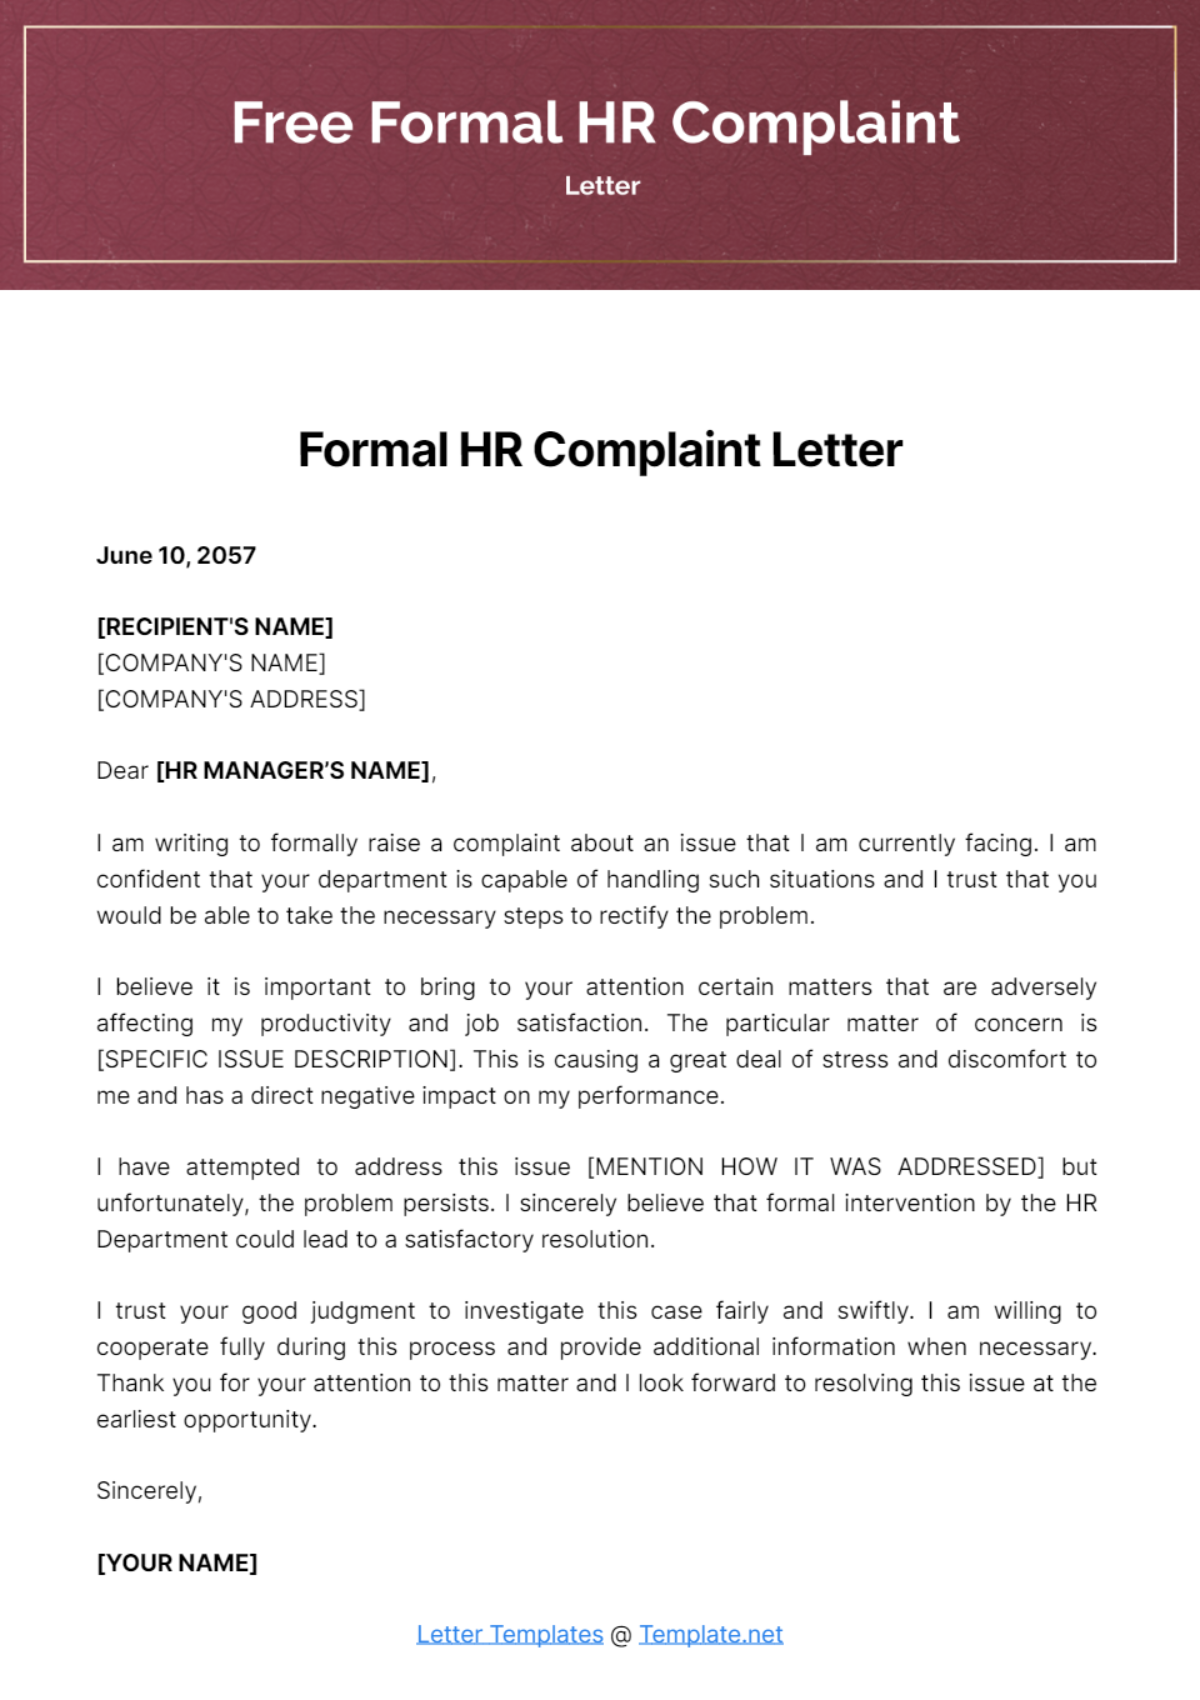 Free Formal HR Complaint Letter Template